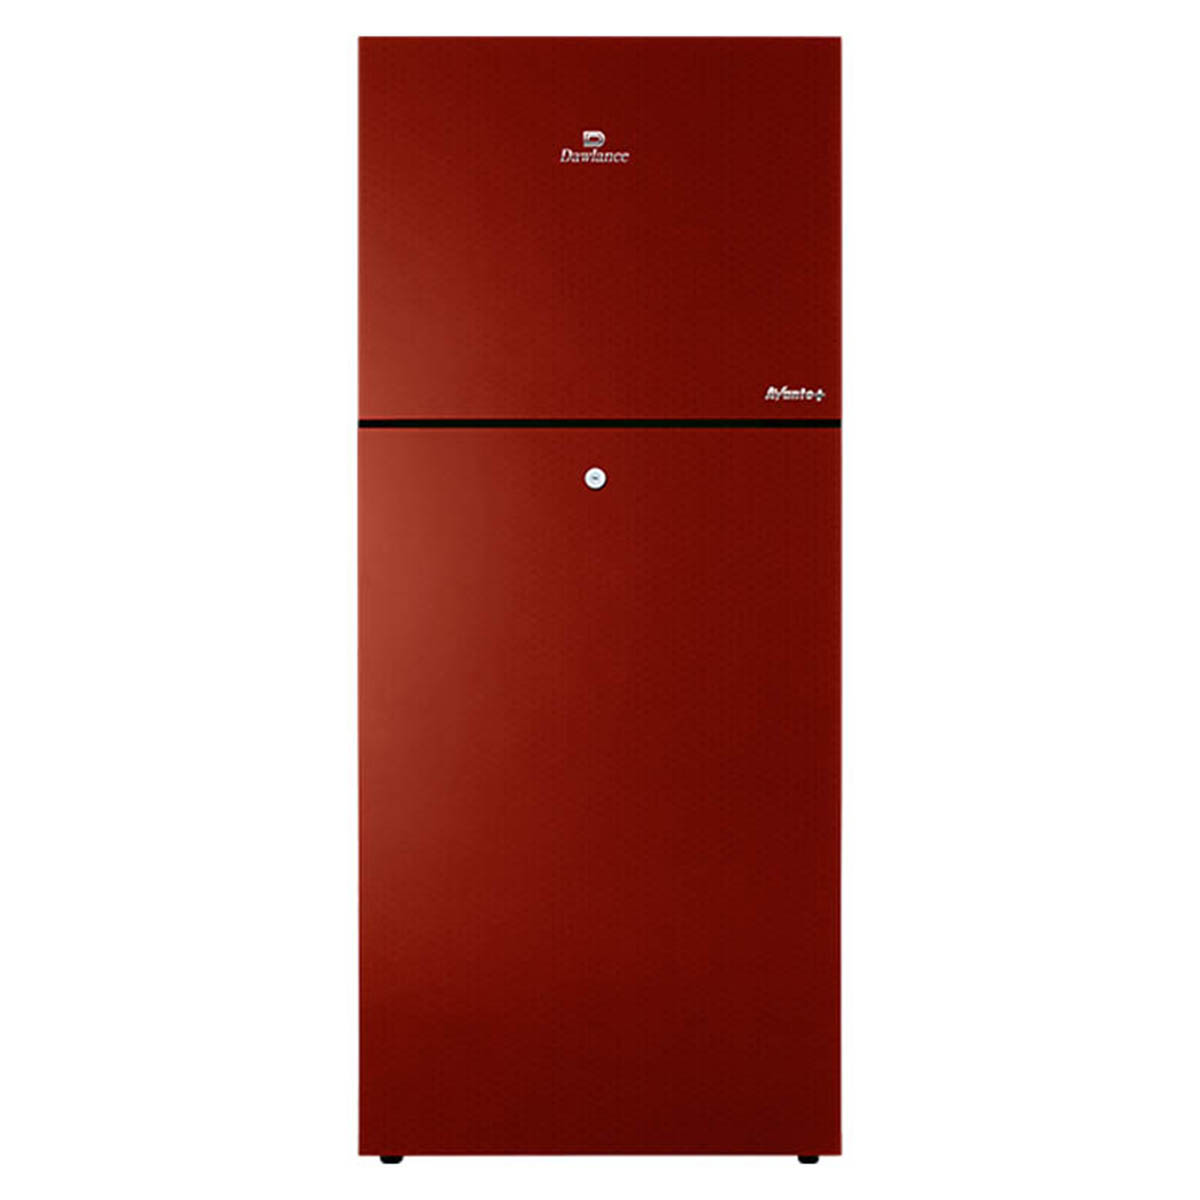 Dawlance Refrigerator 9160 Avante Inverter Ruby Red